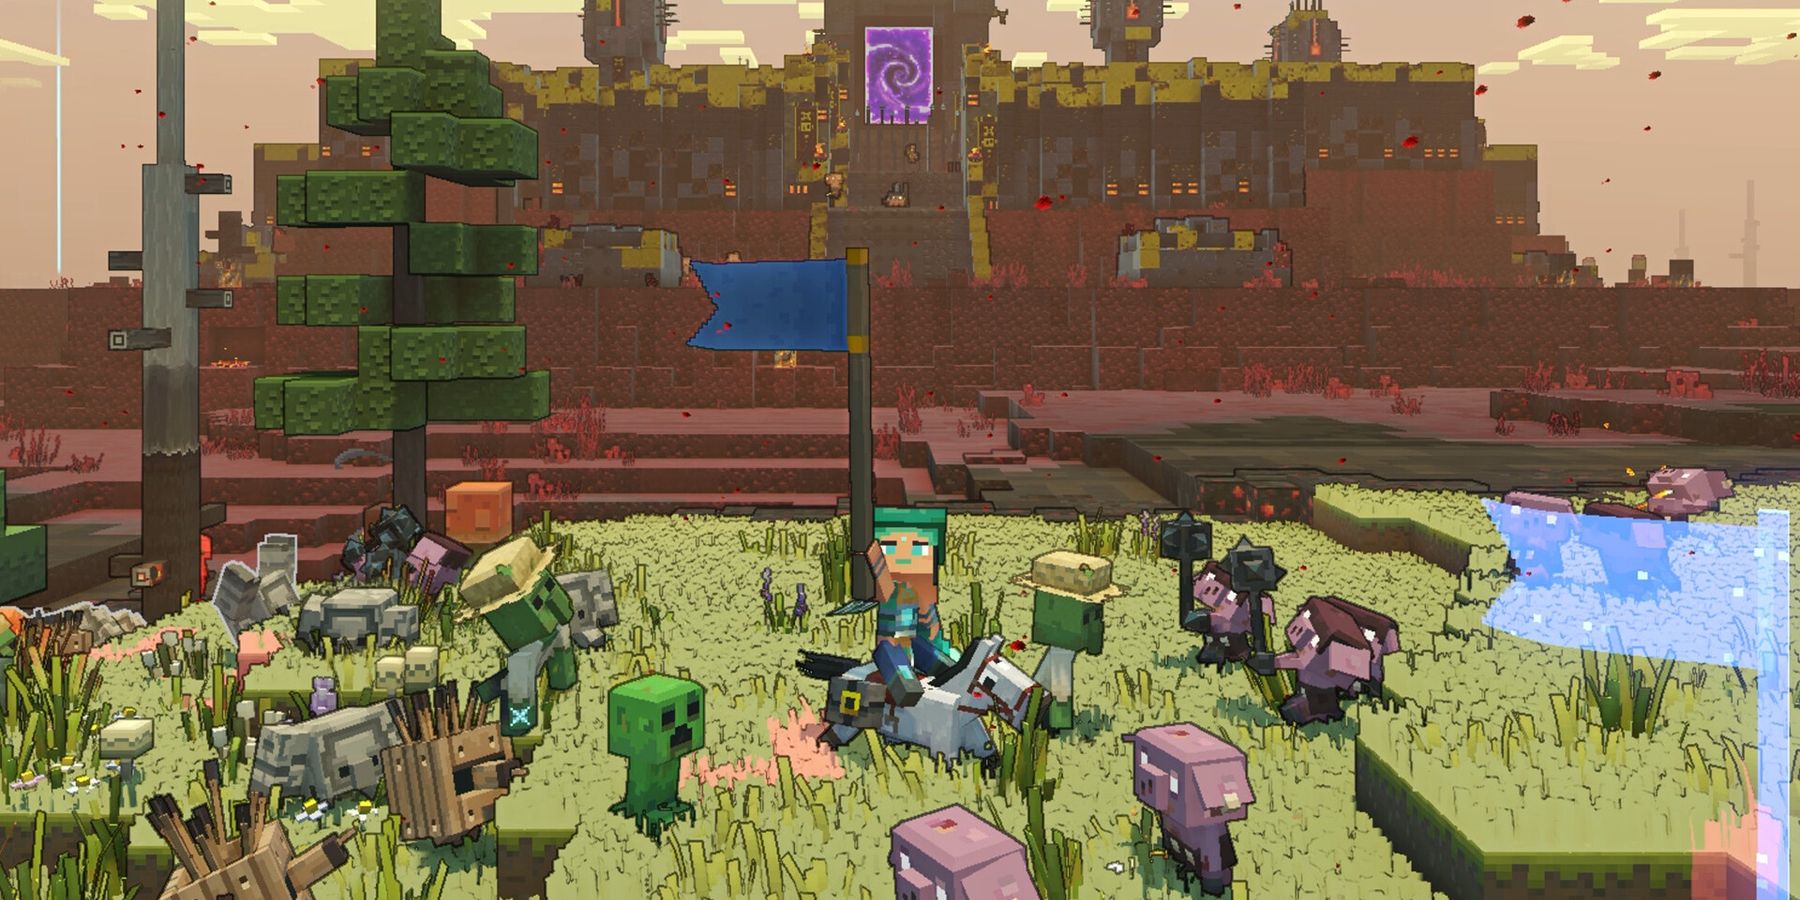 Minecraft Legends: Release Date, Gameplay, Mobs, Platforms, and